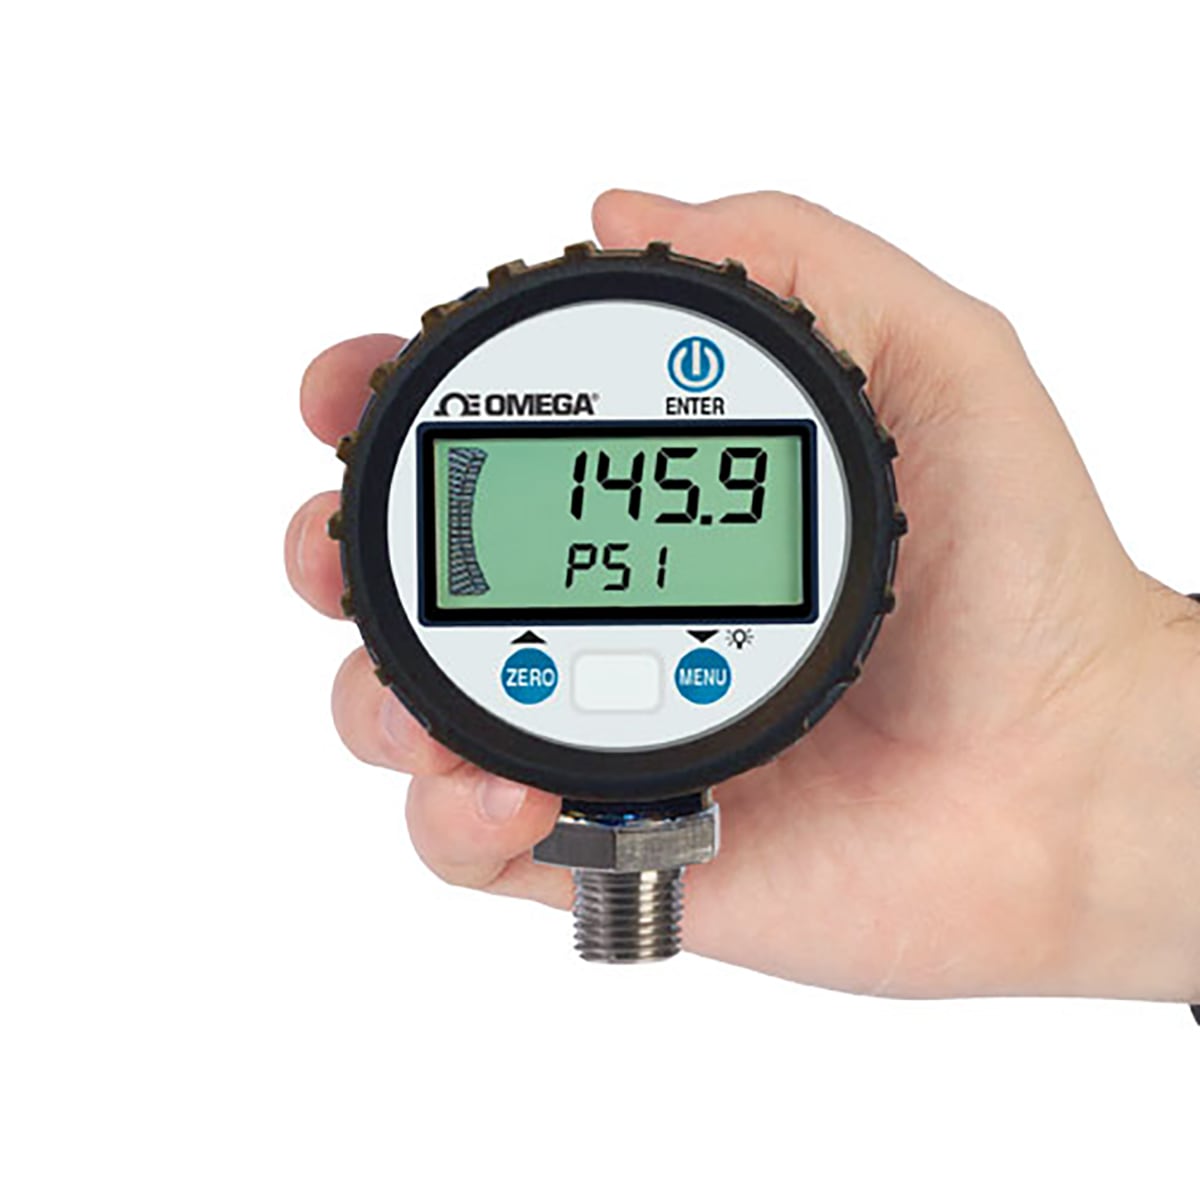 digital vacuum pressure gauge